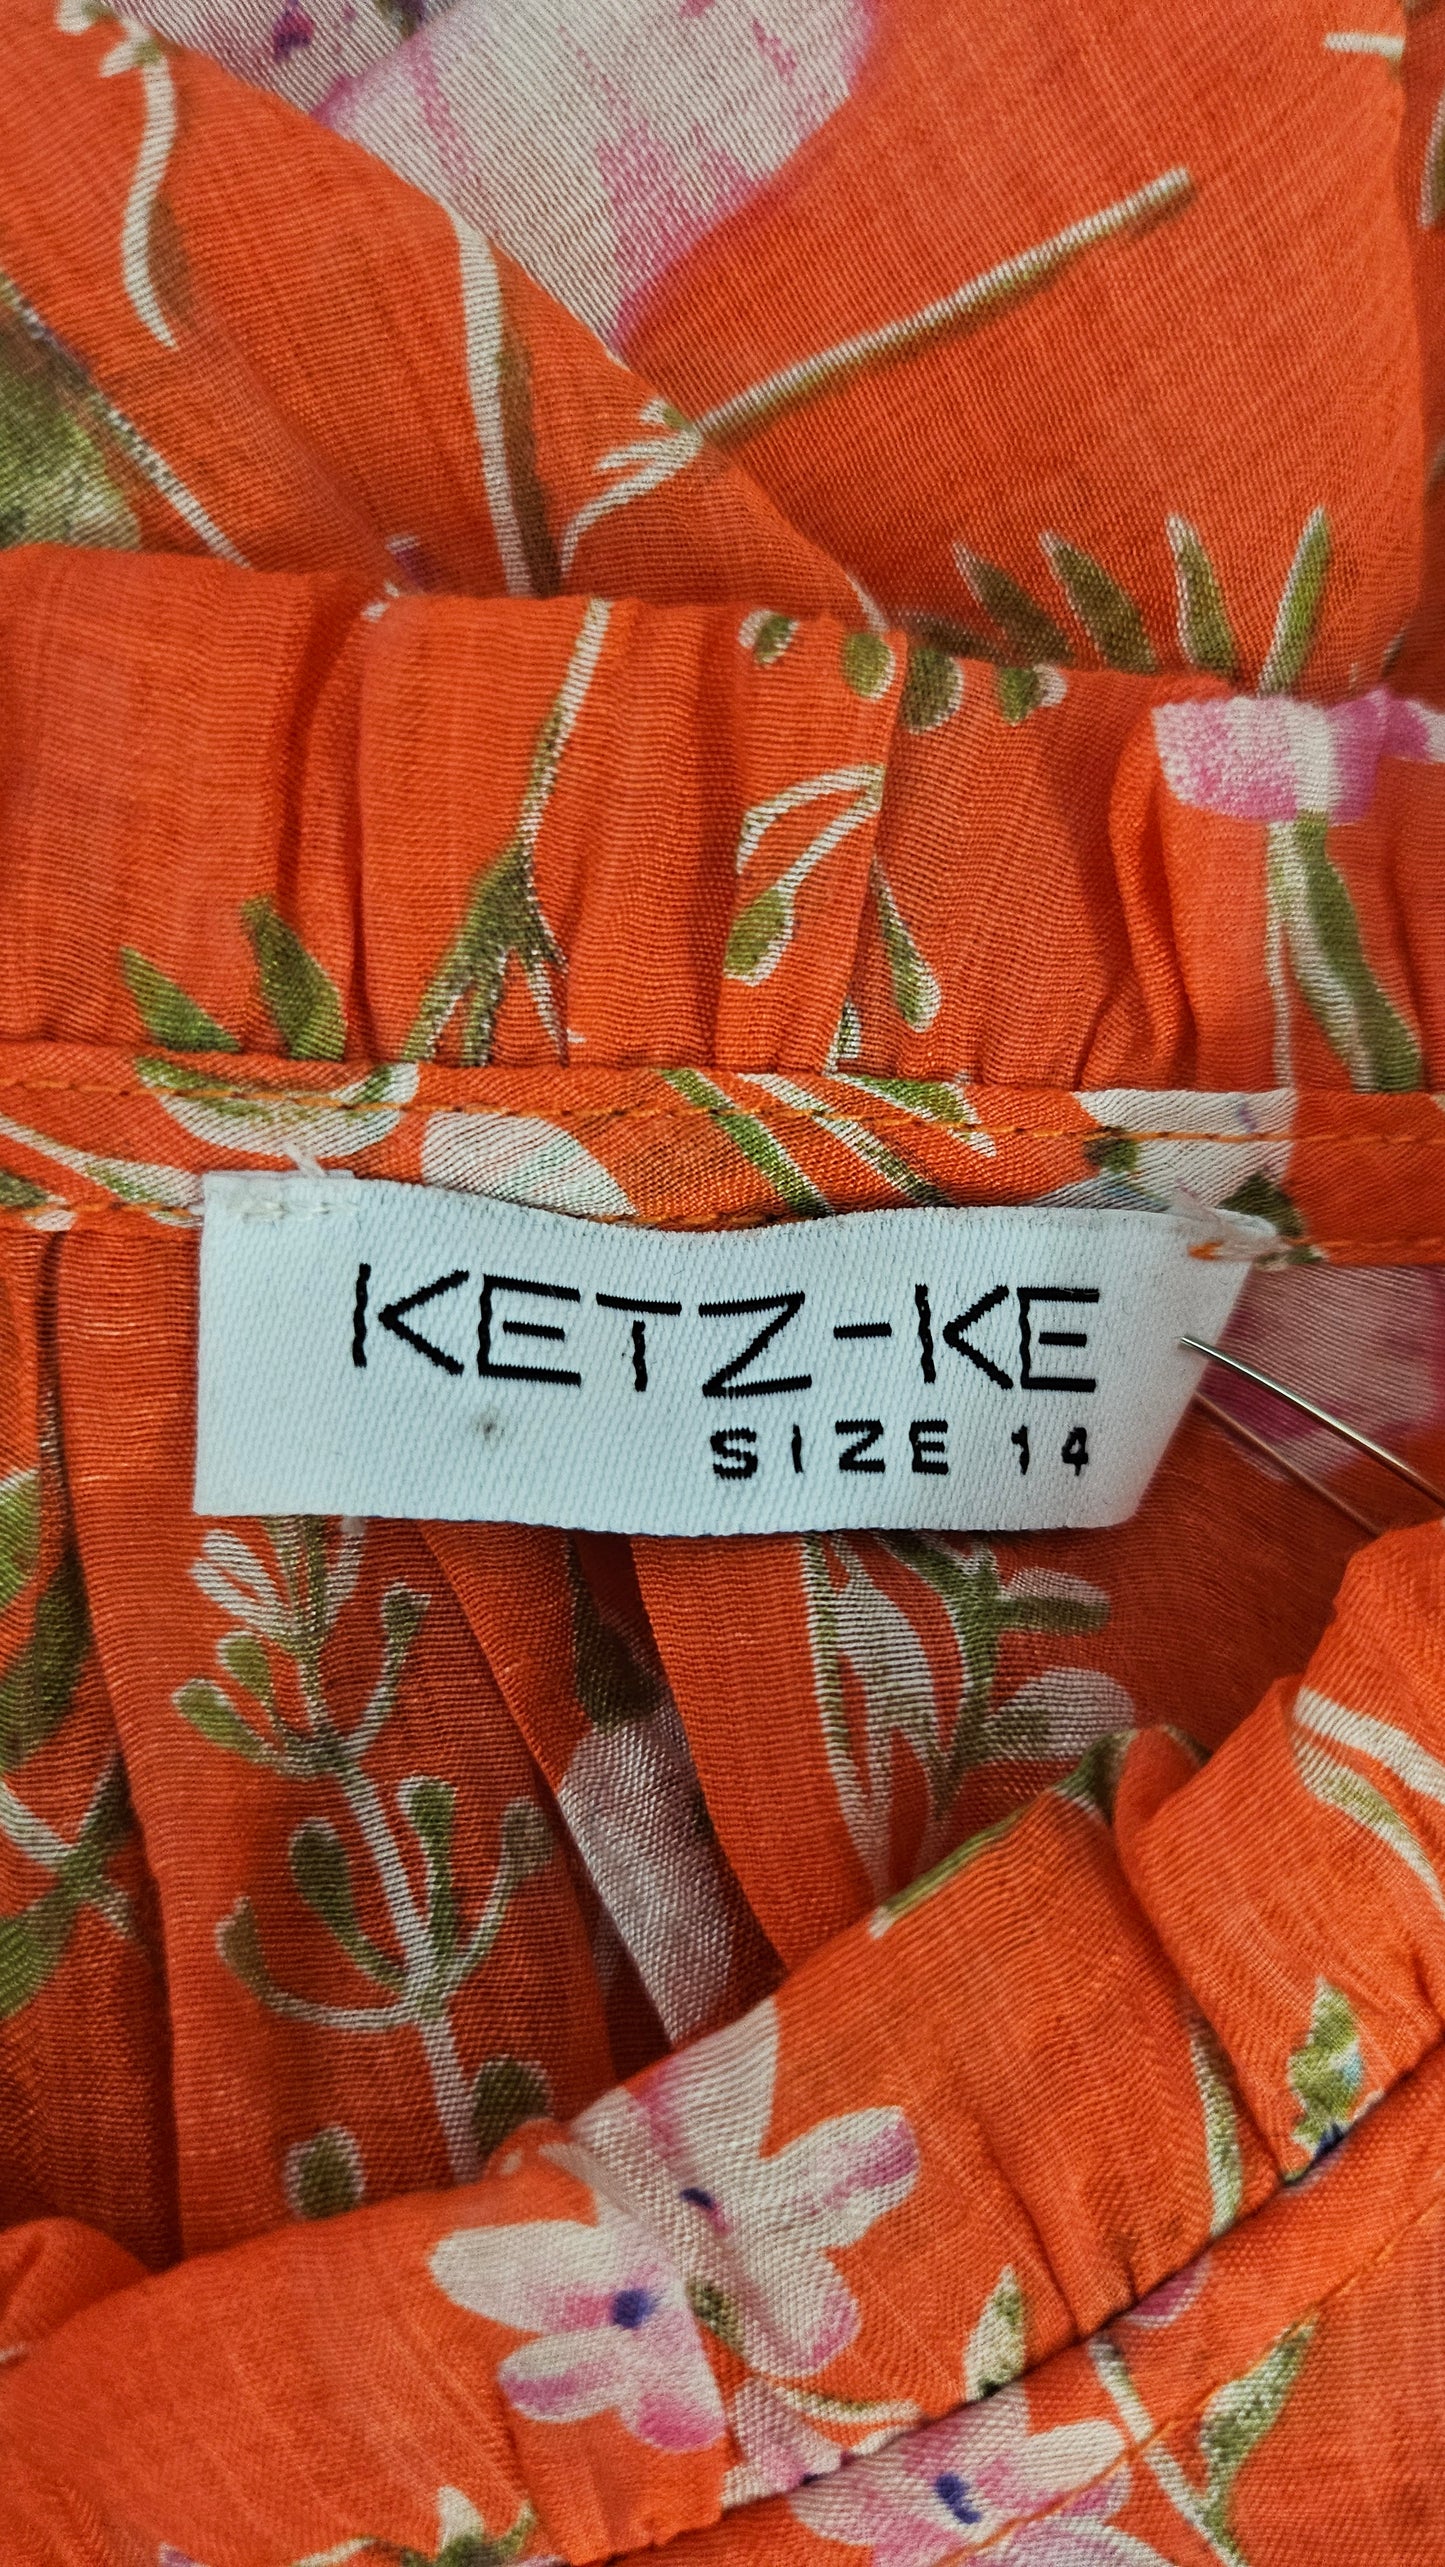 Ketz-ke Orange Long Sleeve Top (14)